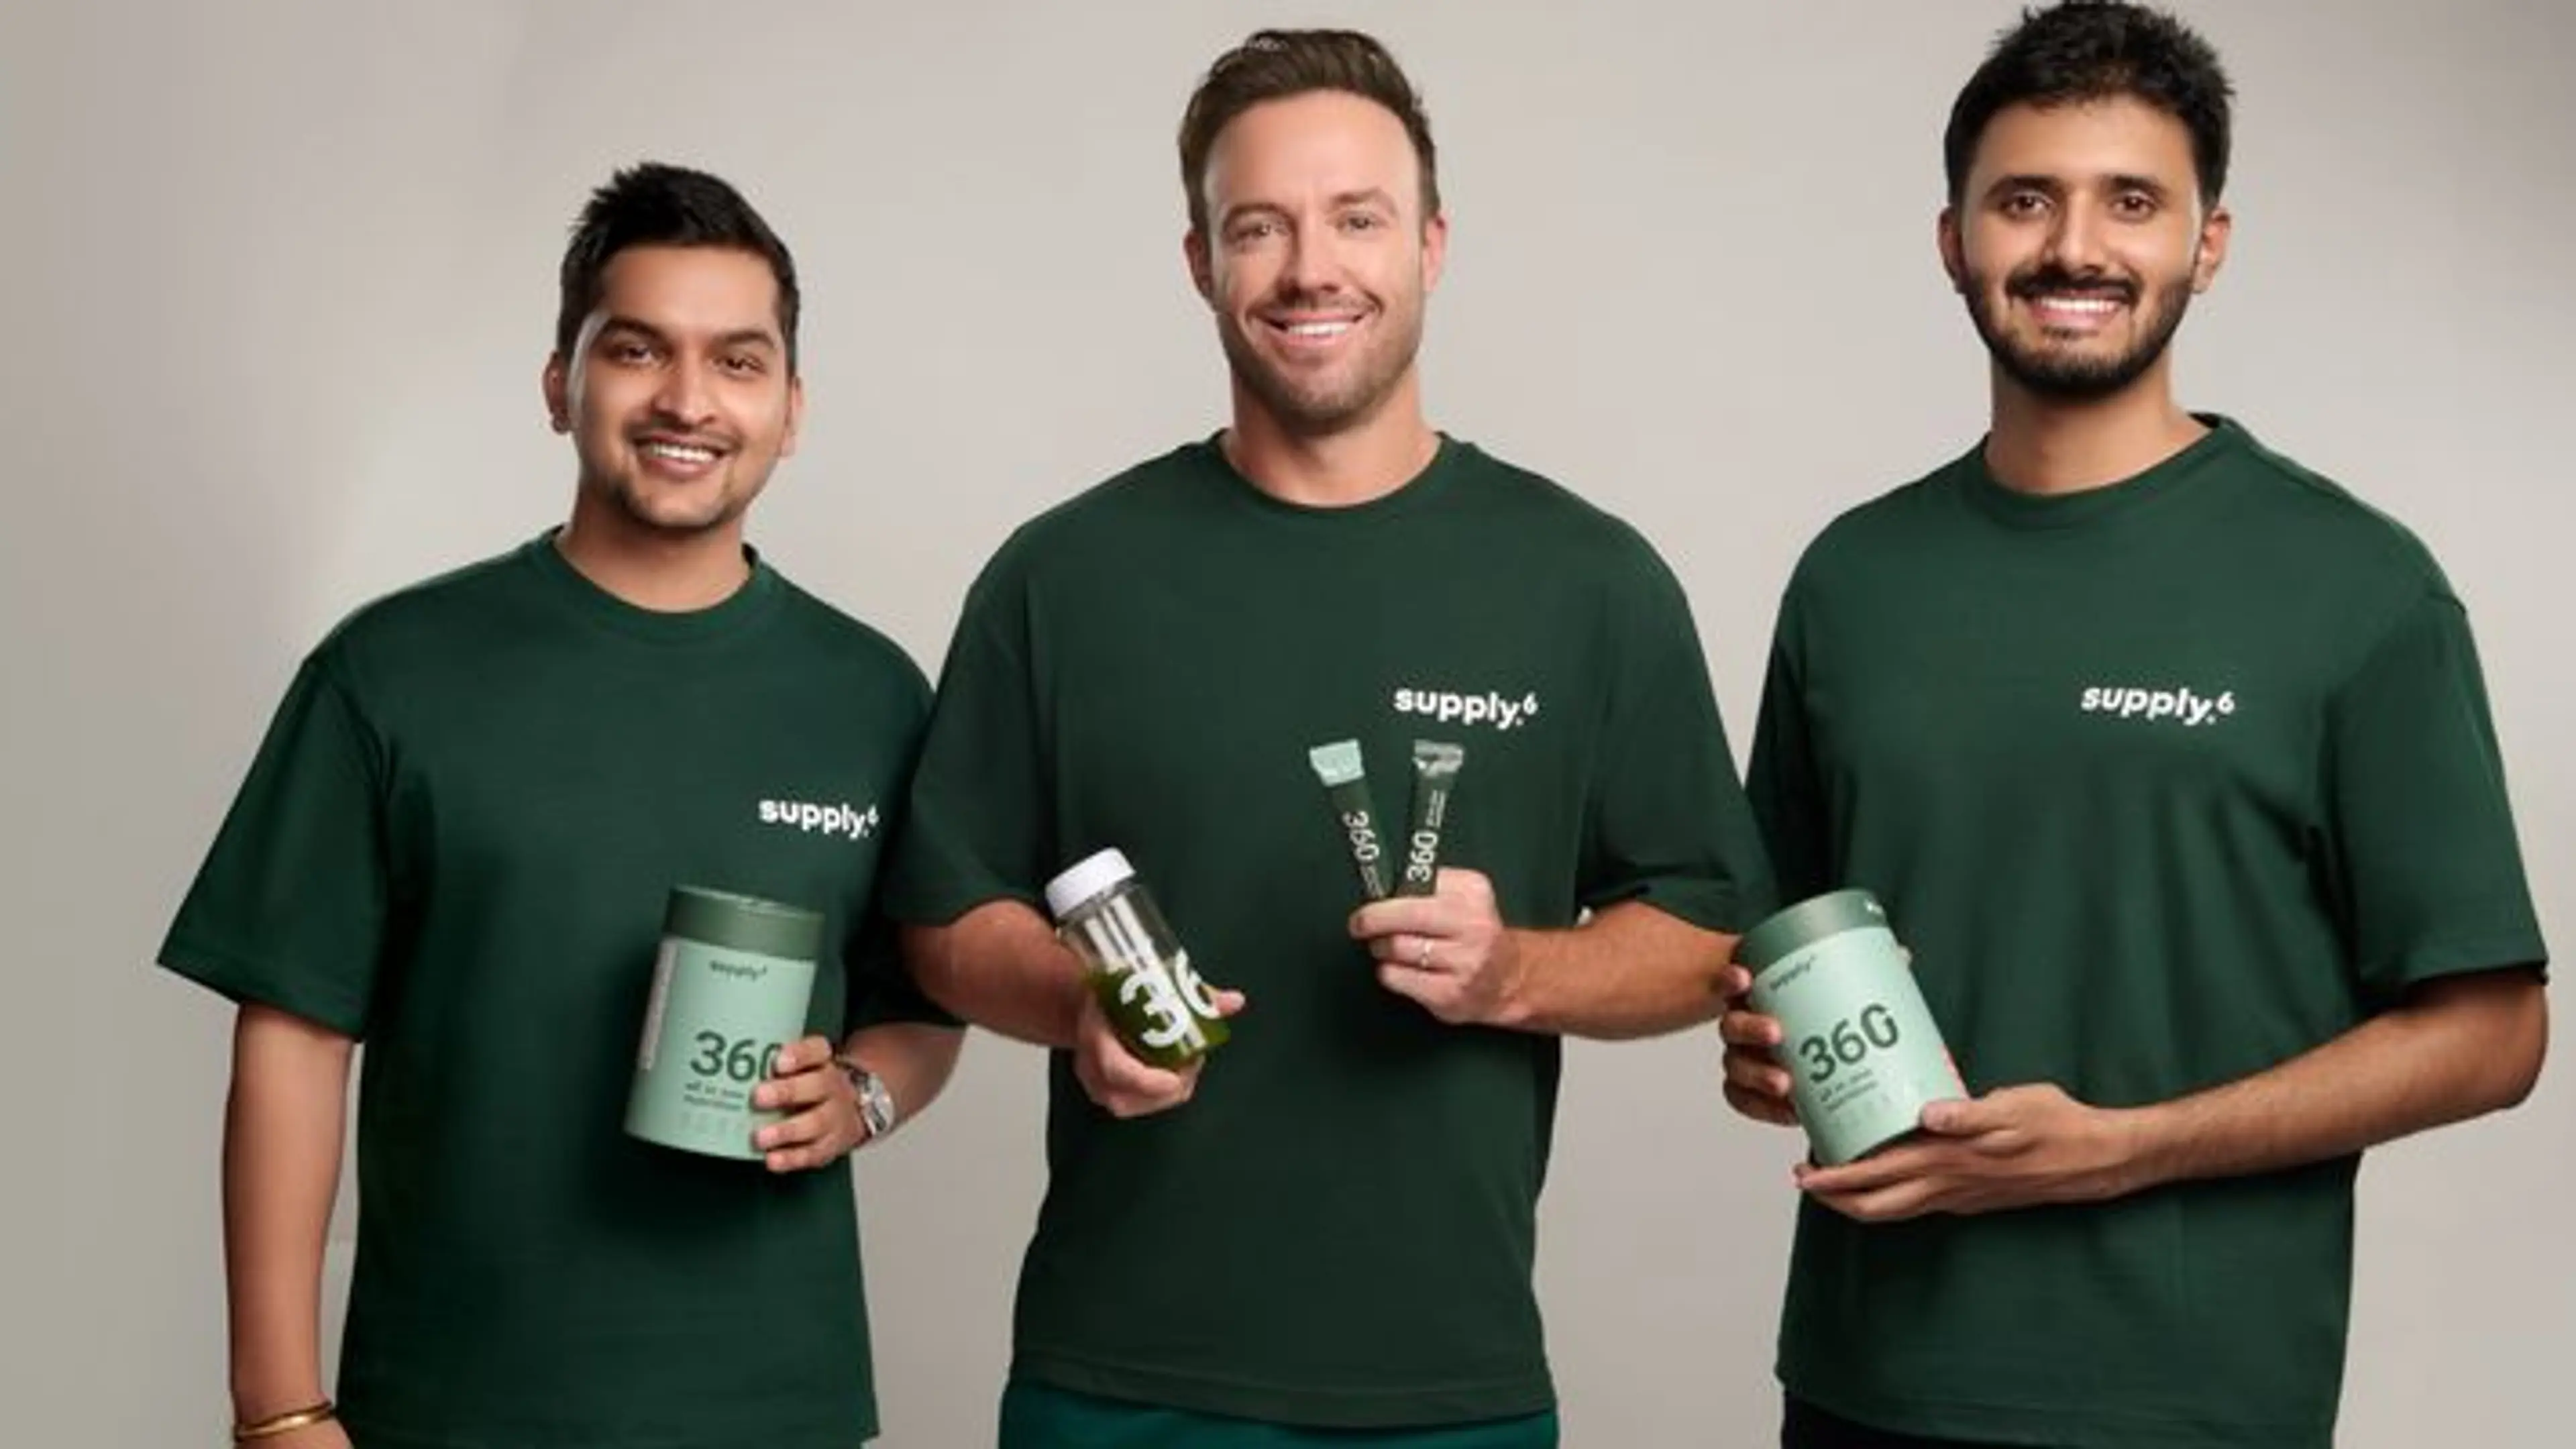 Cricketer AB De Villiers joins Supply6 as brand ambassador, investor